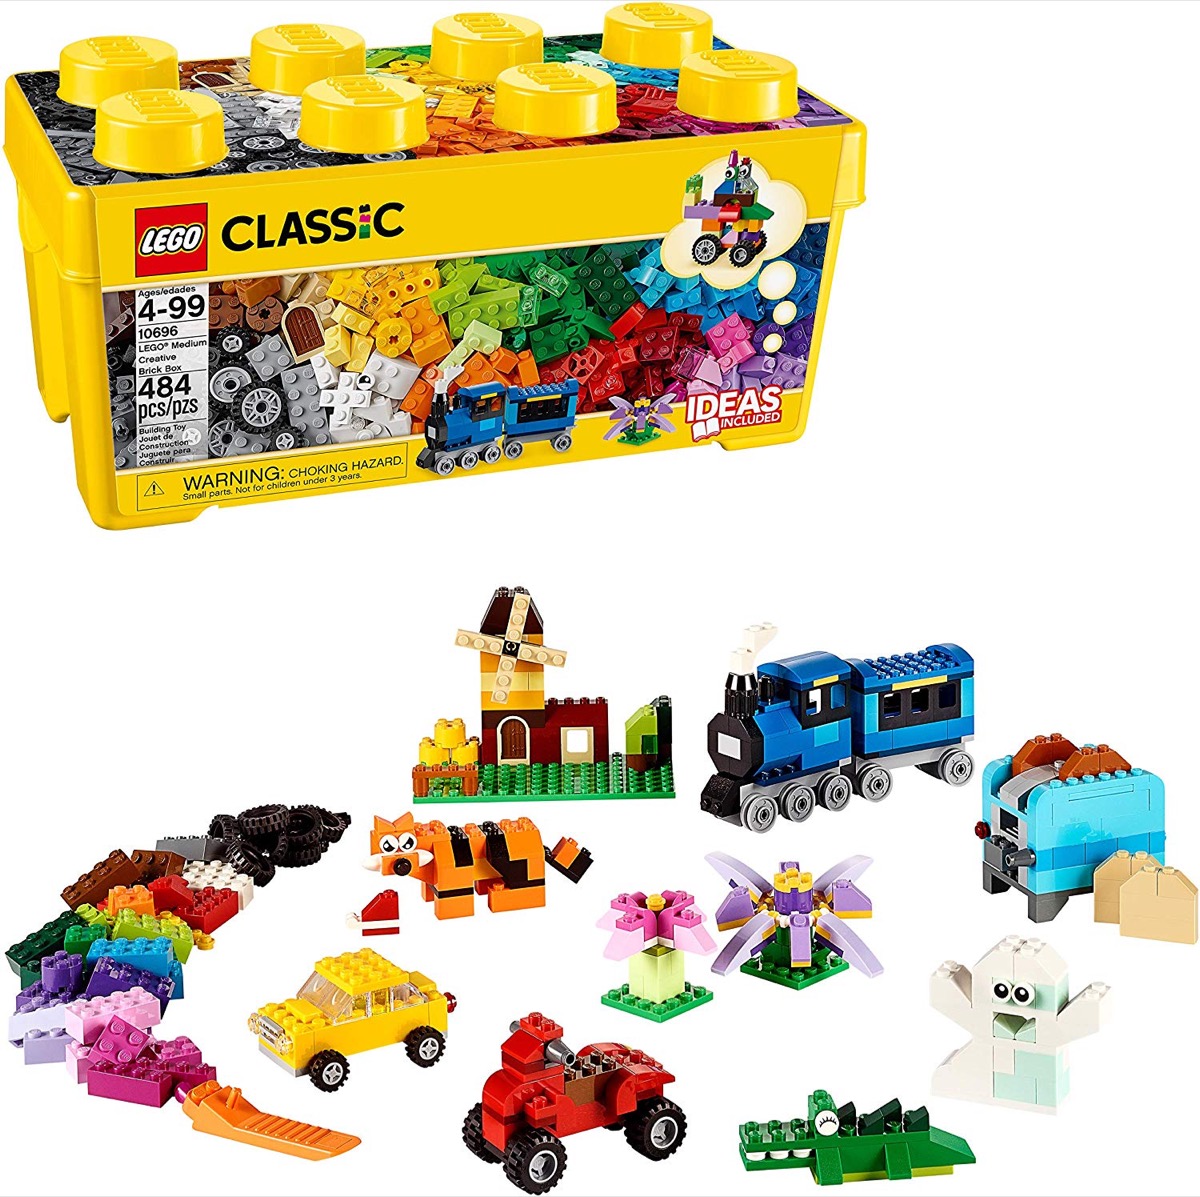 LEGO set with yellow box